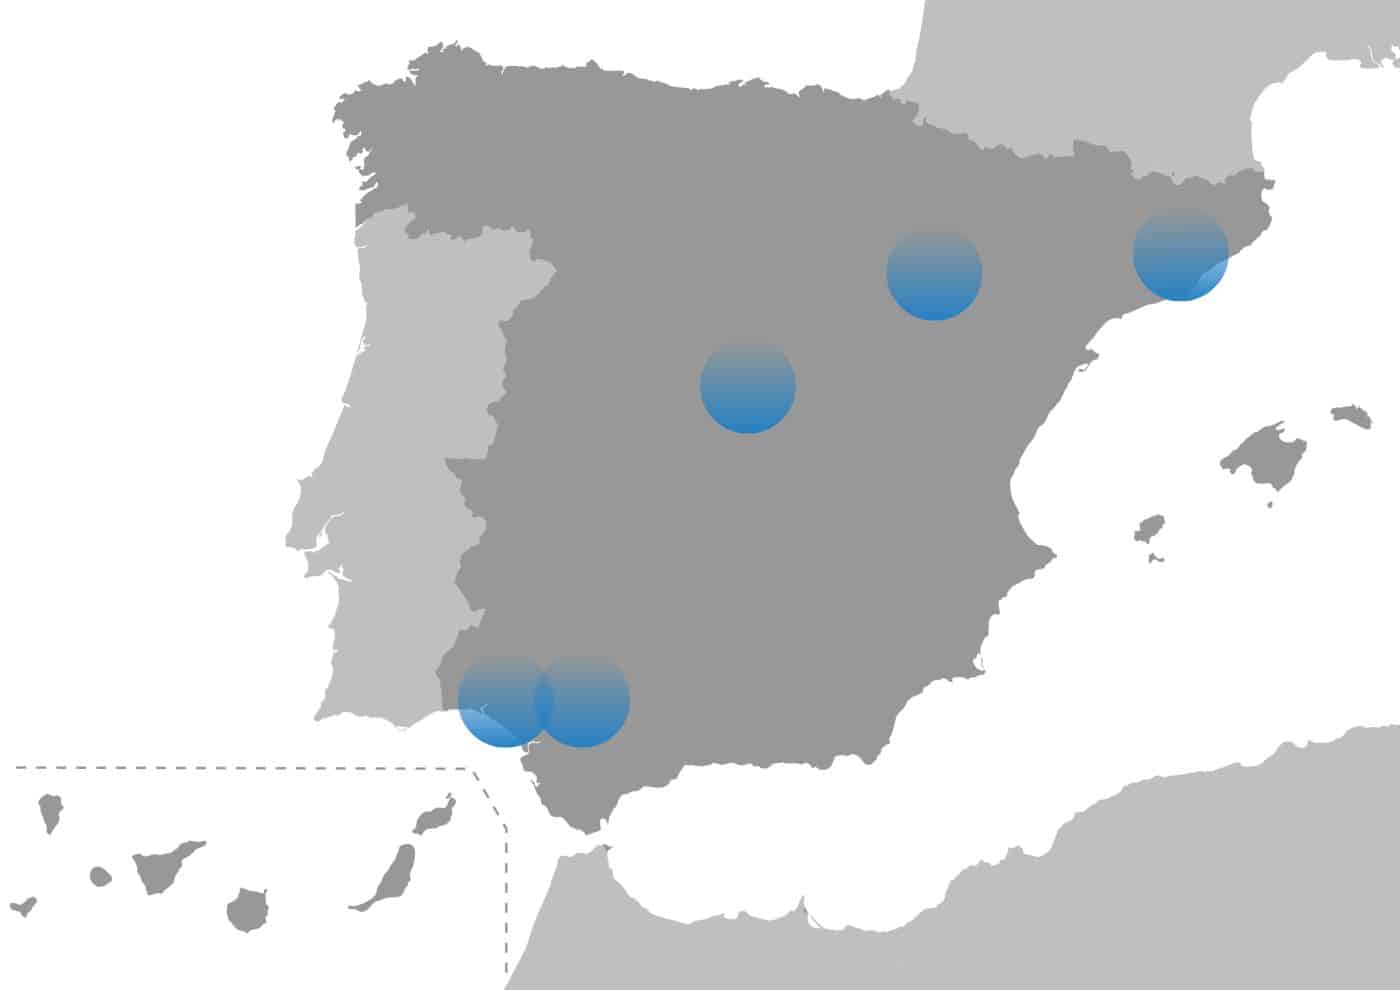 Mapa de España con los distintos centros.